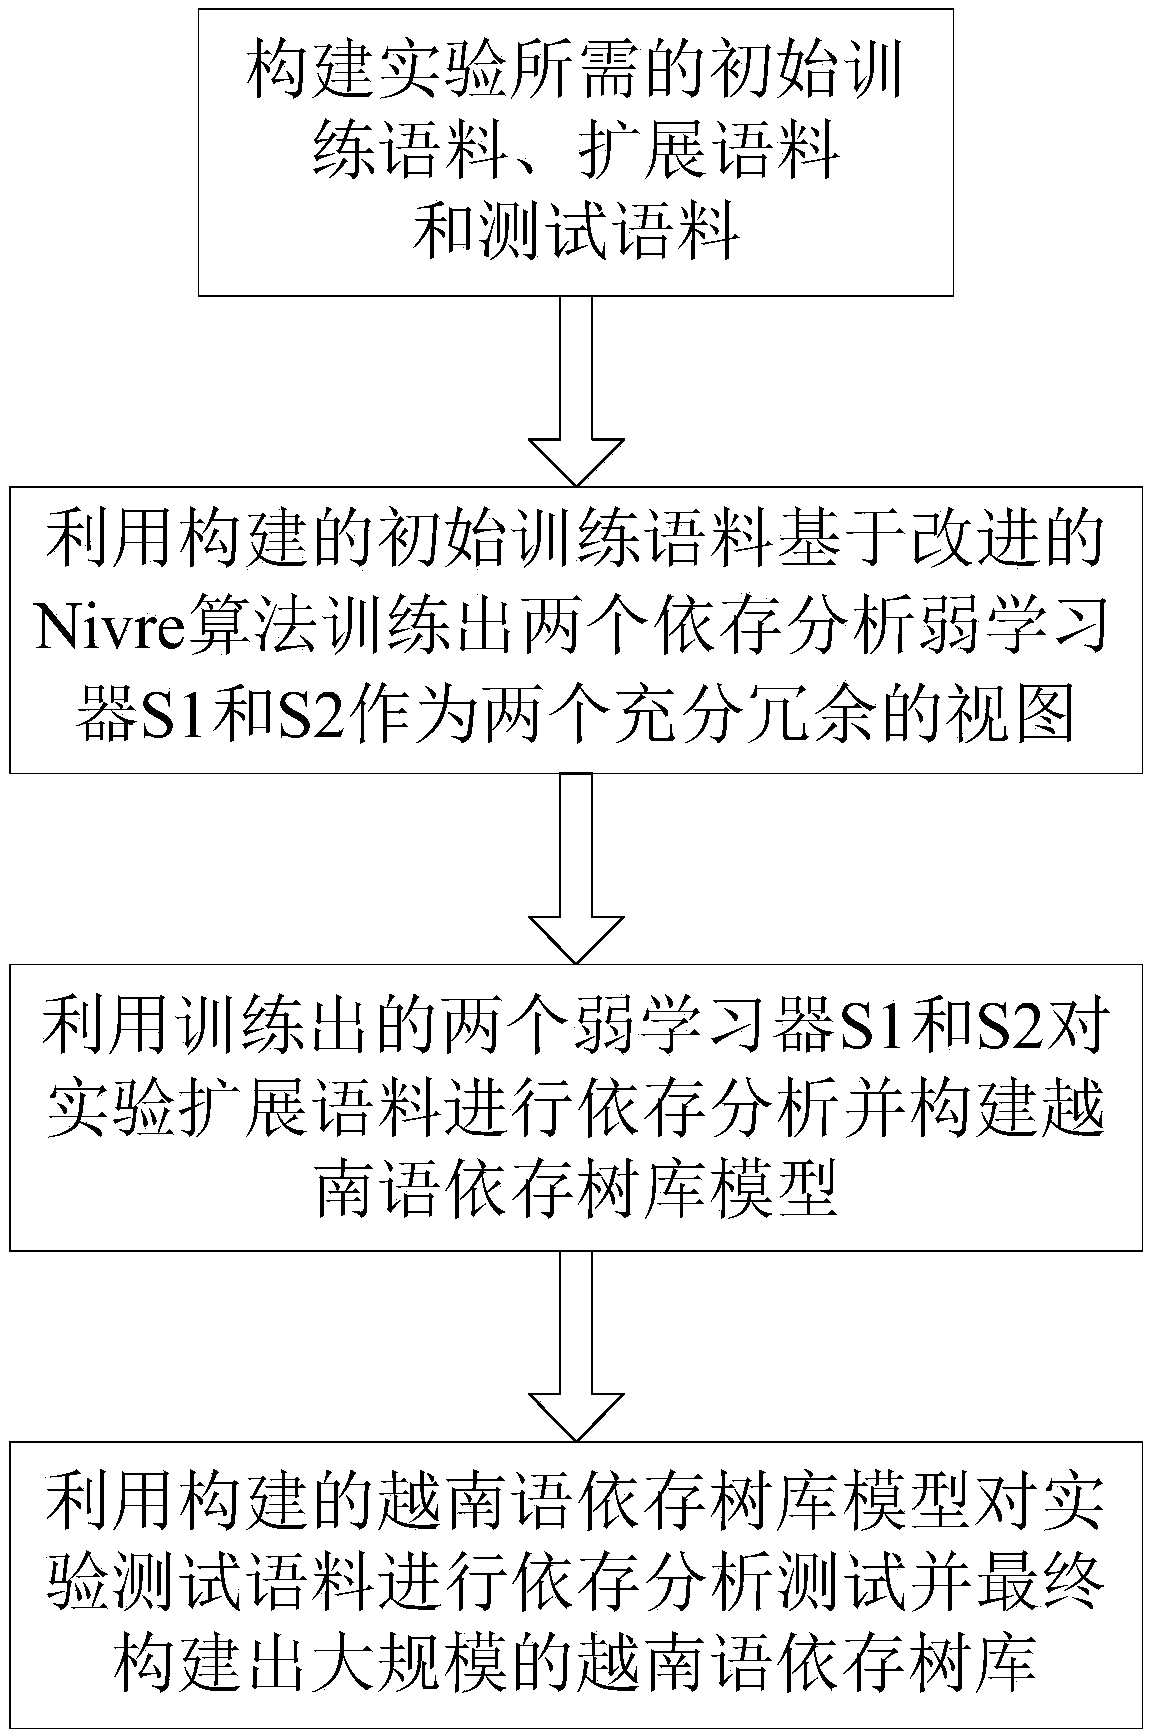 A Method of Constructing Vietnamese Dependency Treebank Based on Improved Nivre Algorithm